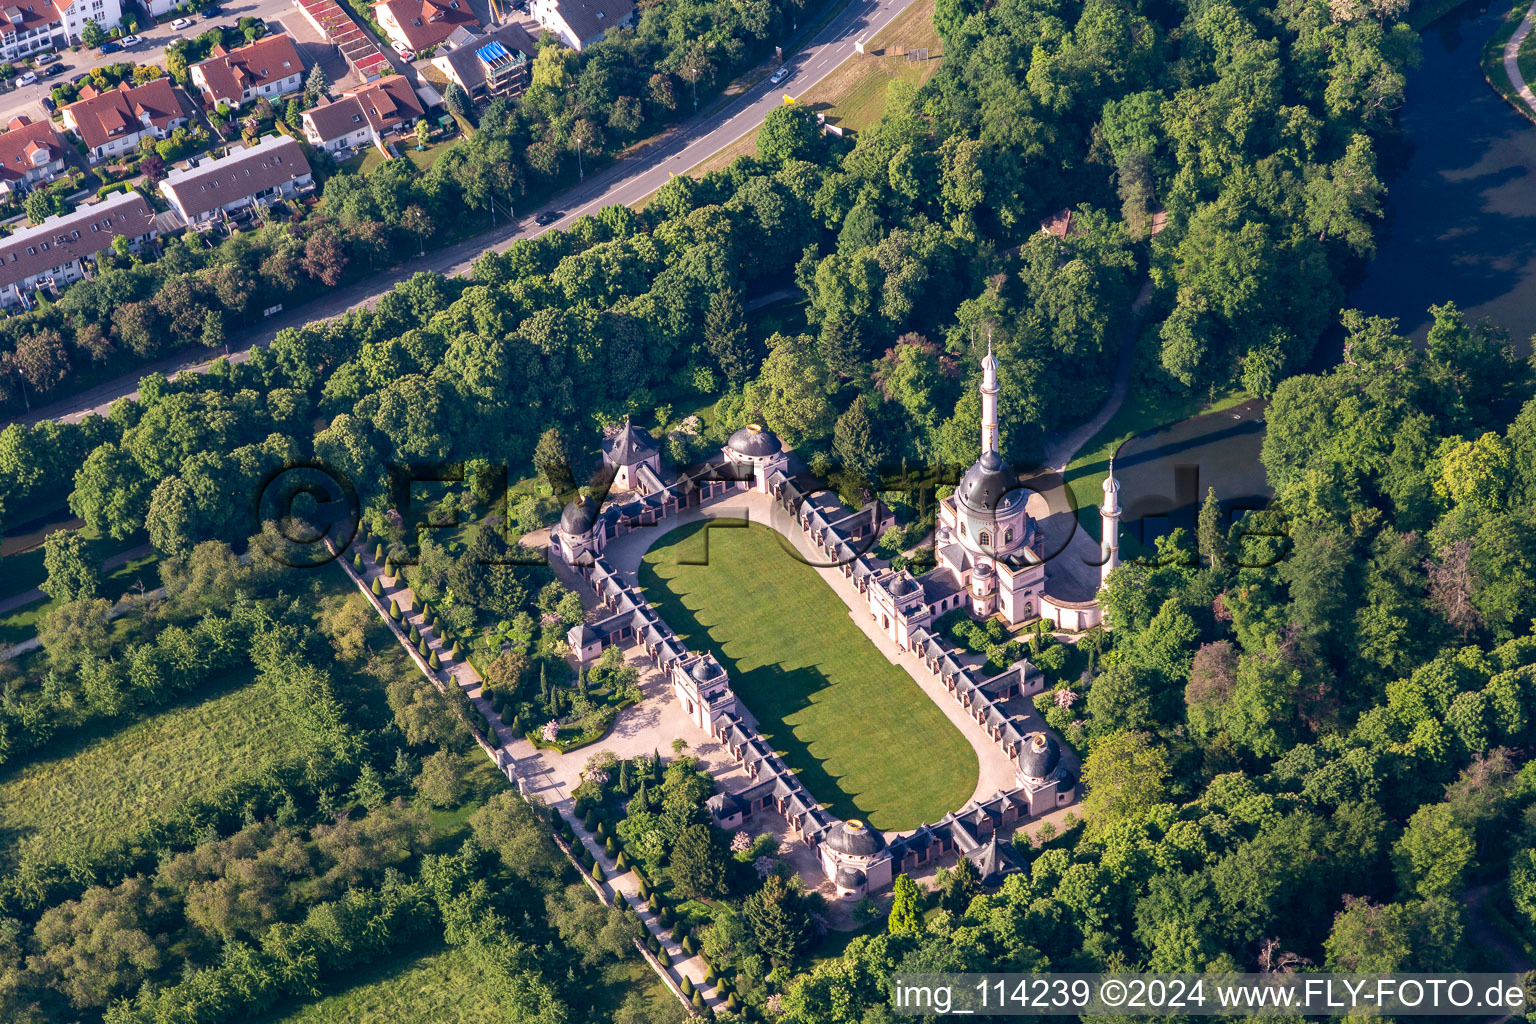 Aerial photograpy of Schwetzingen Castle and the French baroque garden in Schwetzingen in the state of Baden-Wuerttemberg